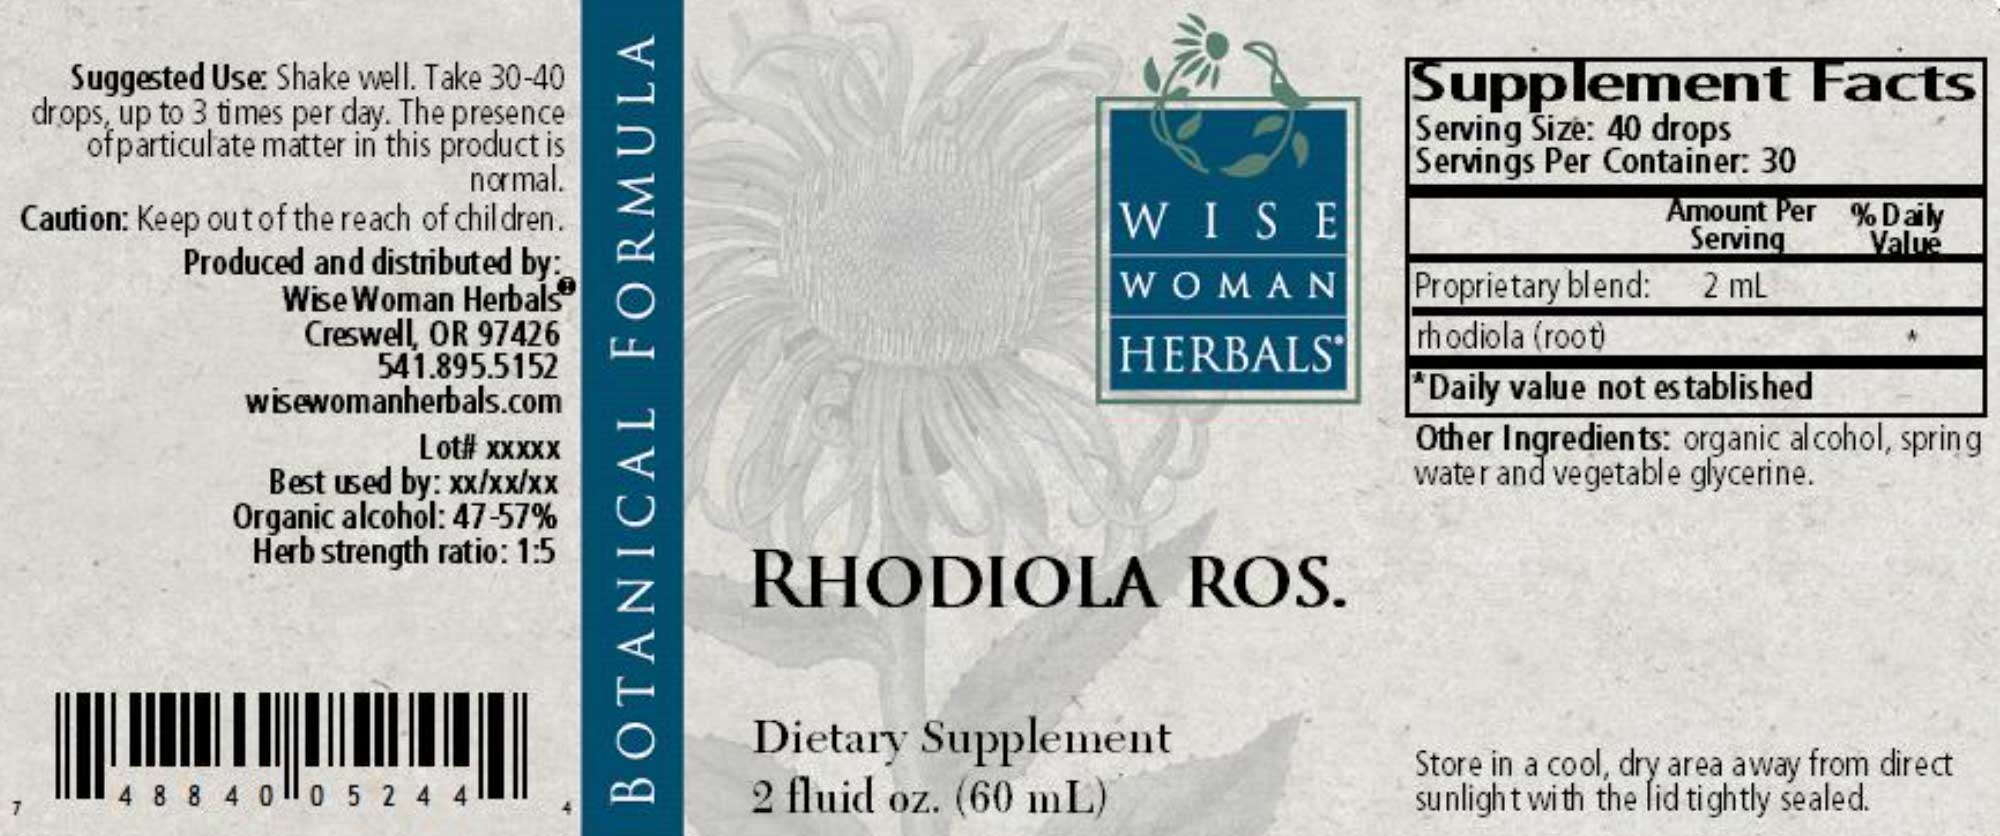 Wise Woman Herbals Rhodiola Rosea Label